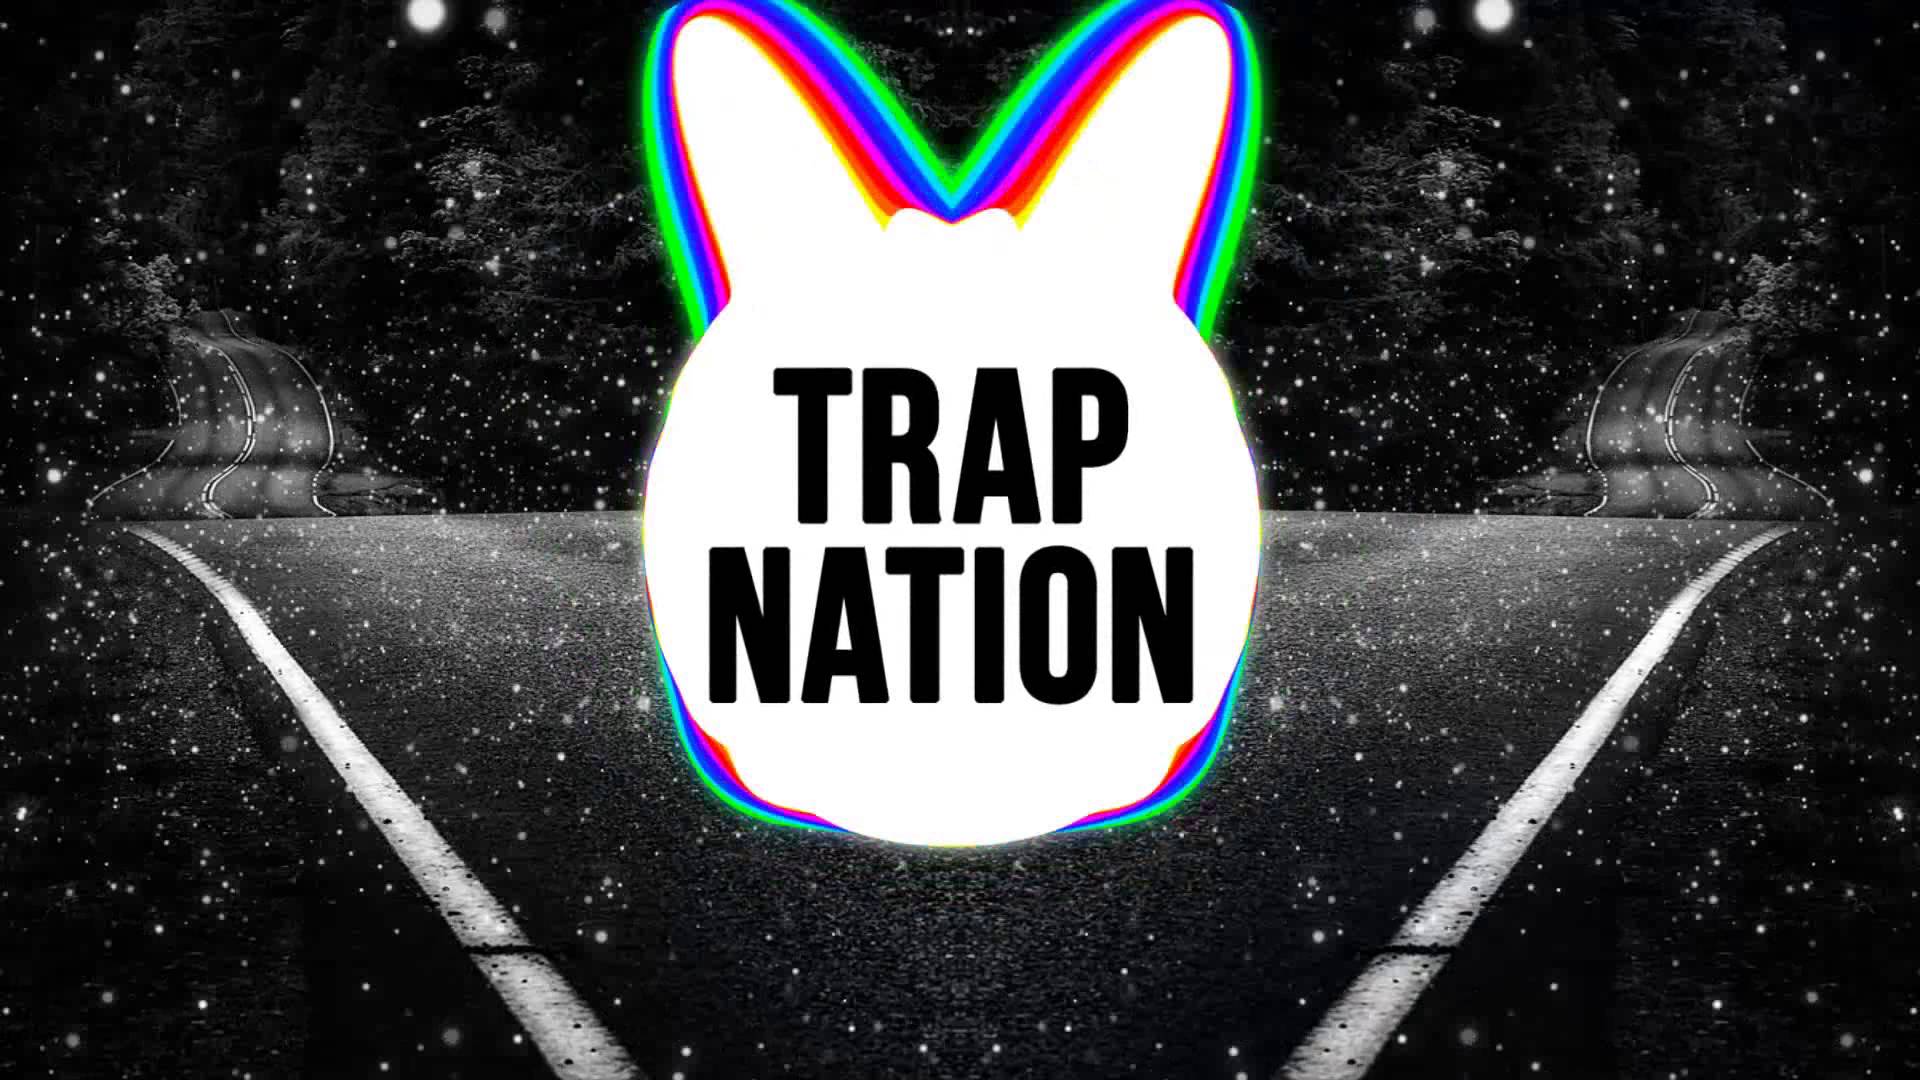 Trap nation Logos